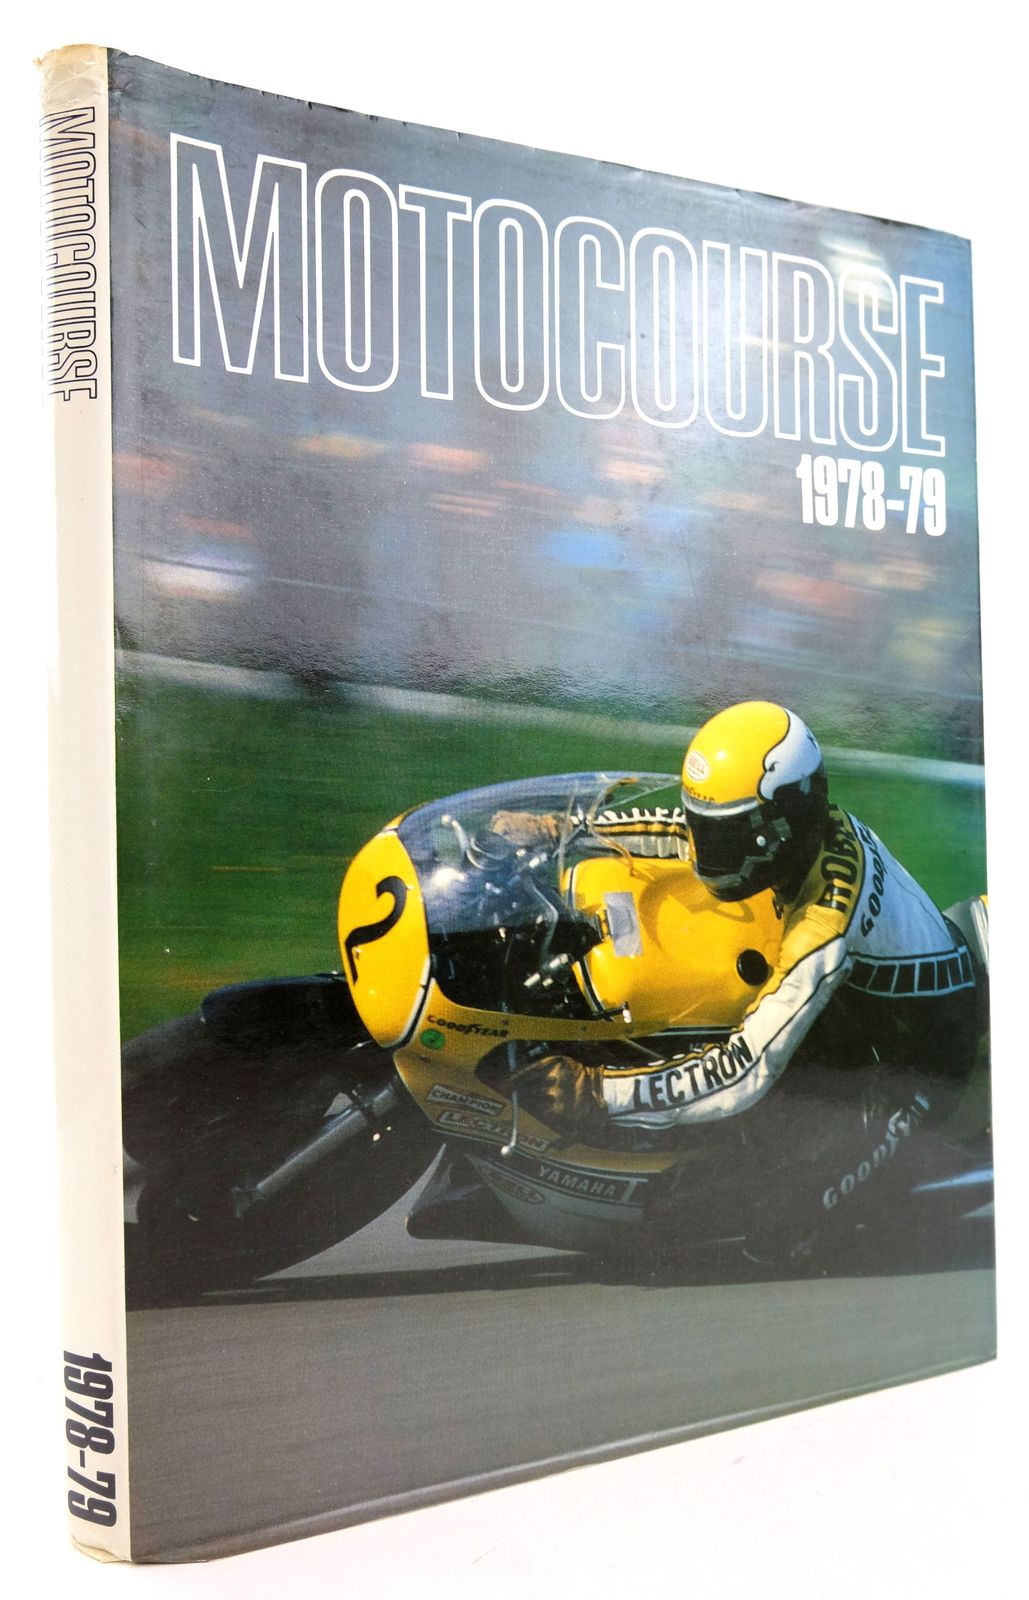 Motocourse 1978-79